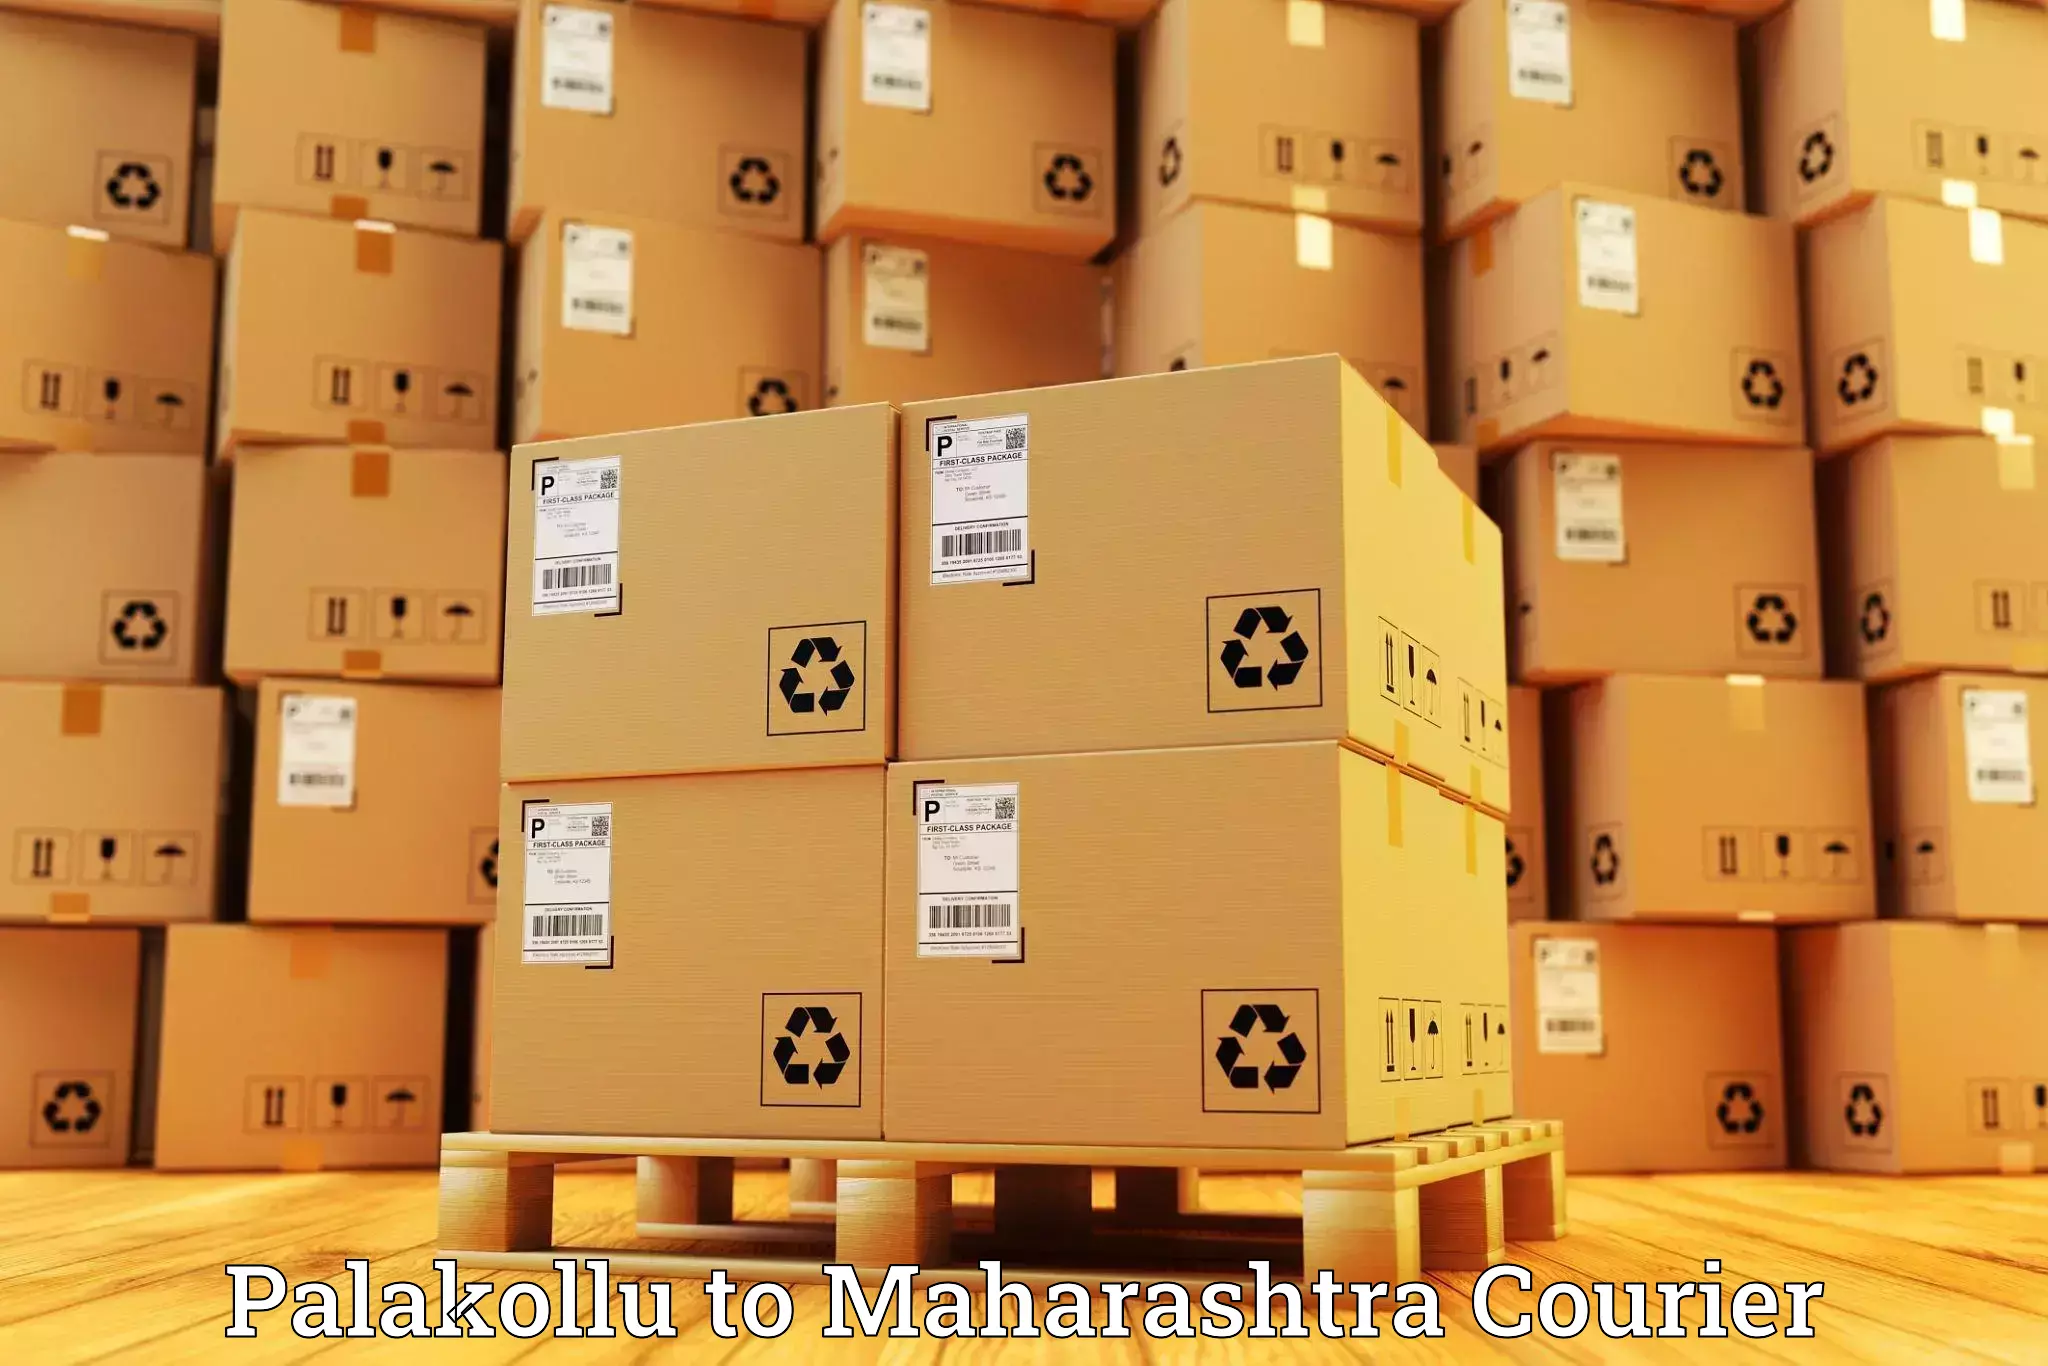 State-of-the-art courier technology Palakollu to Satara